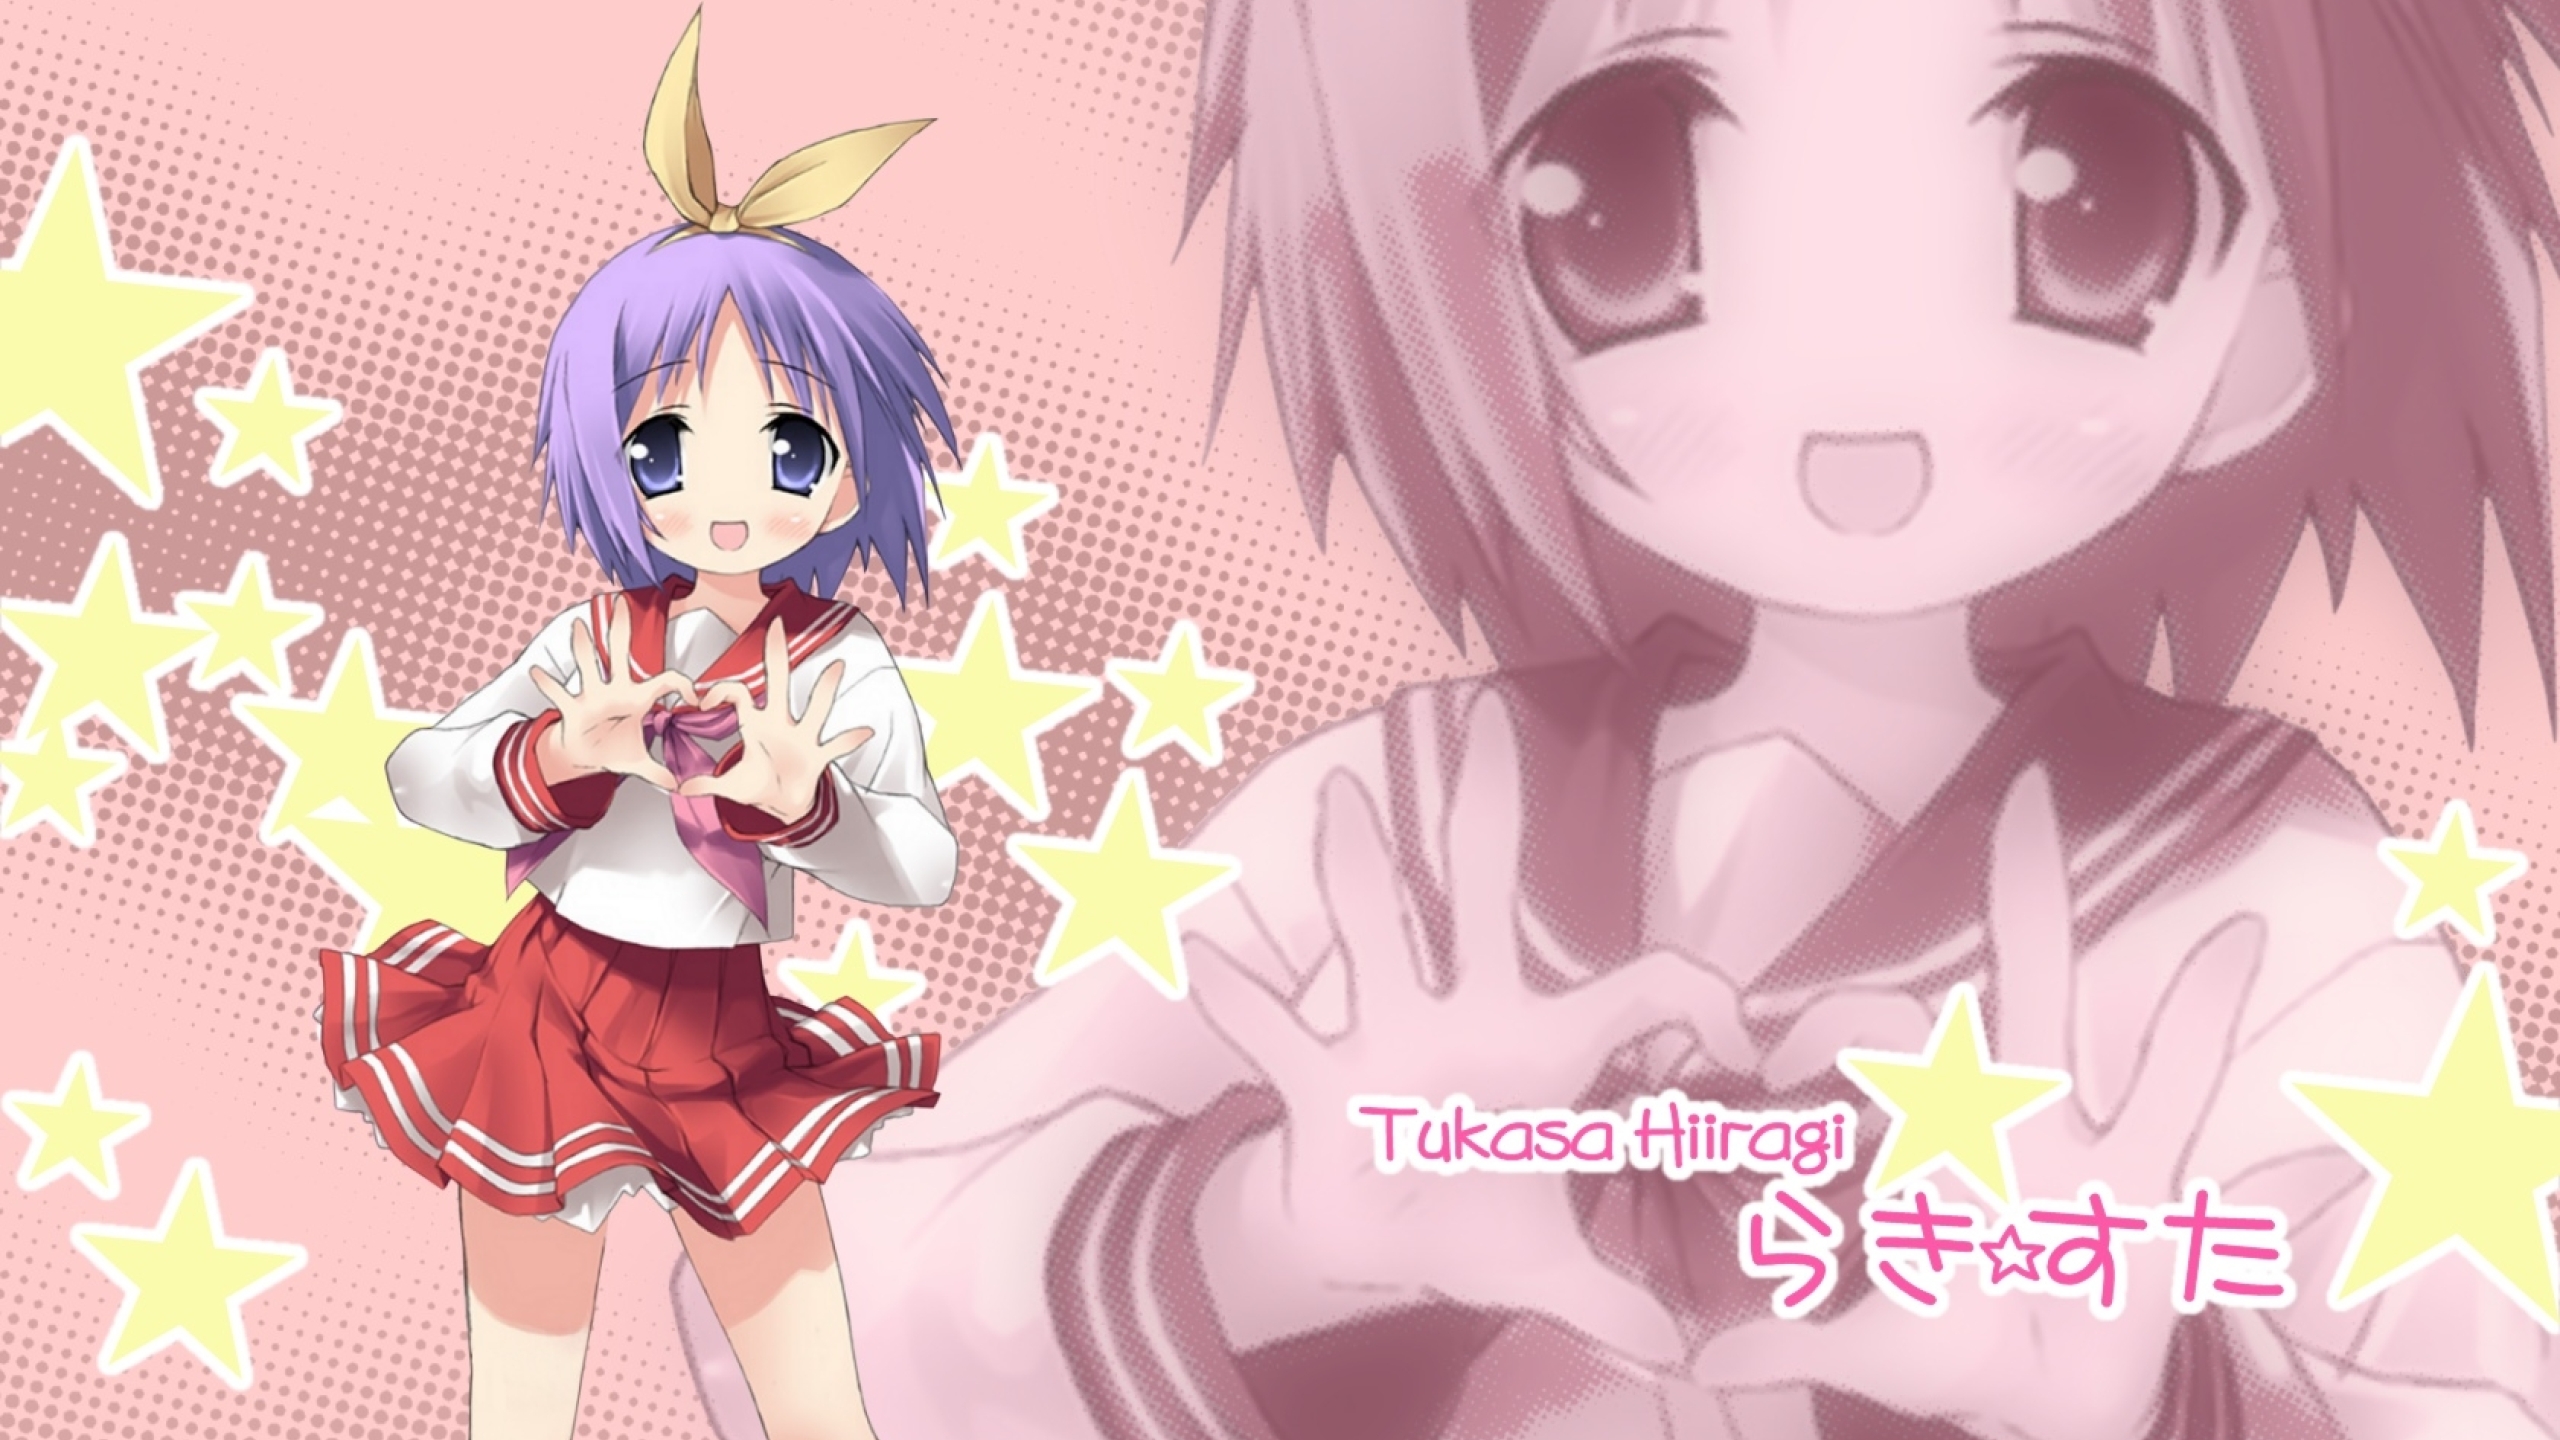 2560x1440 Lucky Star Hiiragi Tsukasa Girl 1440p Resolution Wallpaper Hd Anime 4k Wallpapers Images Photos And Background